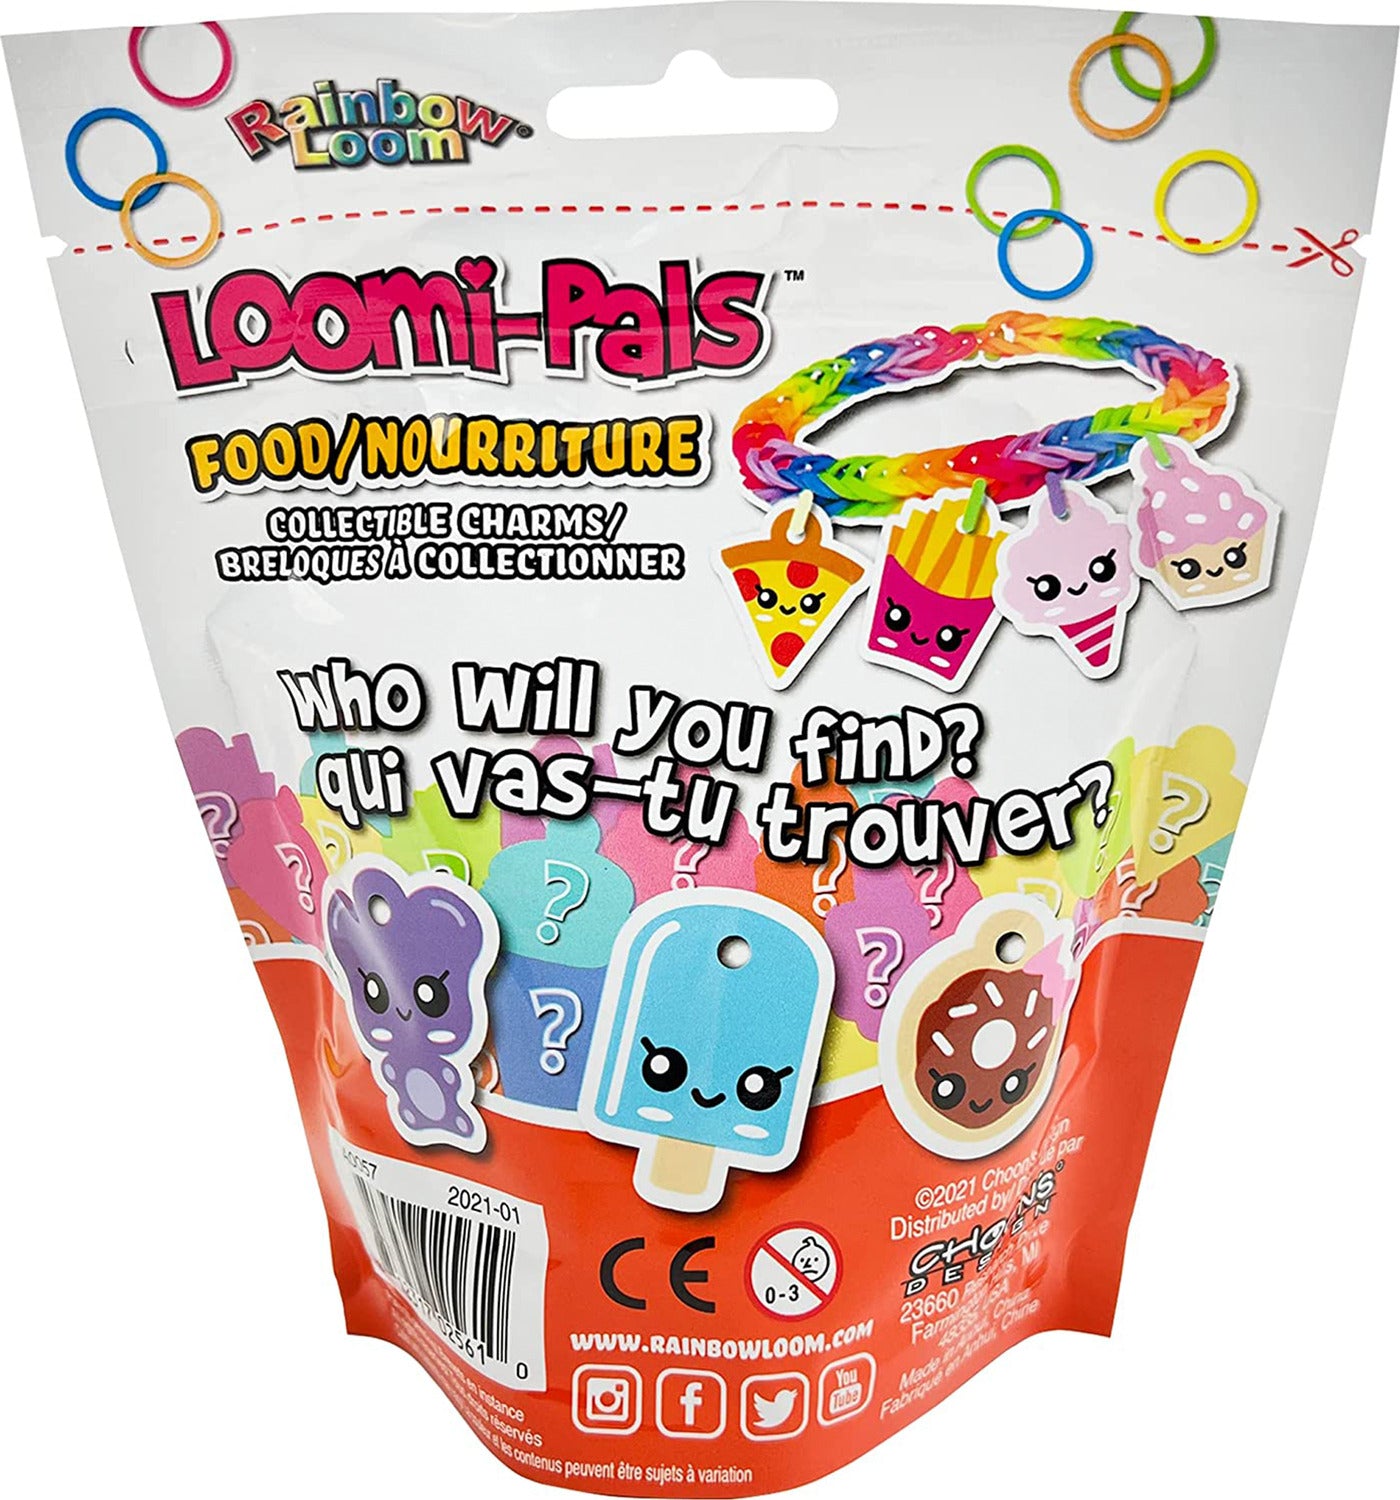 Loomi-Pals Collectibles - Food series